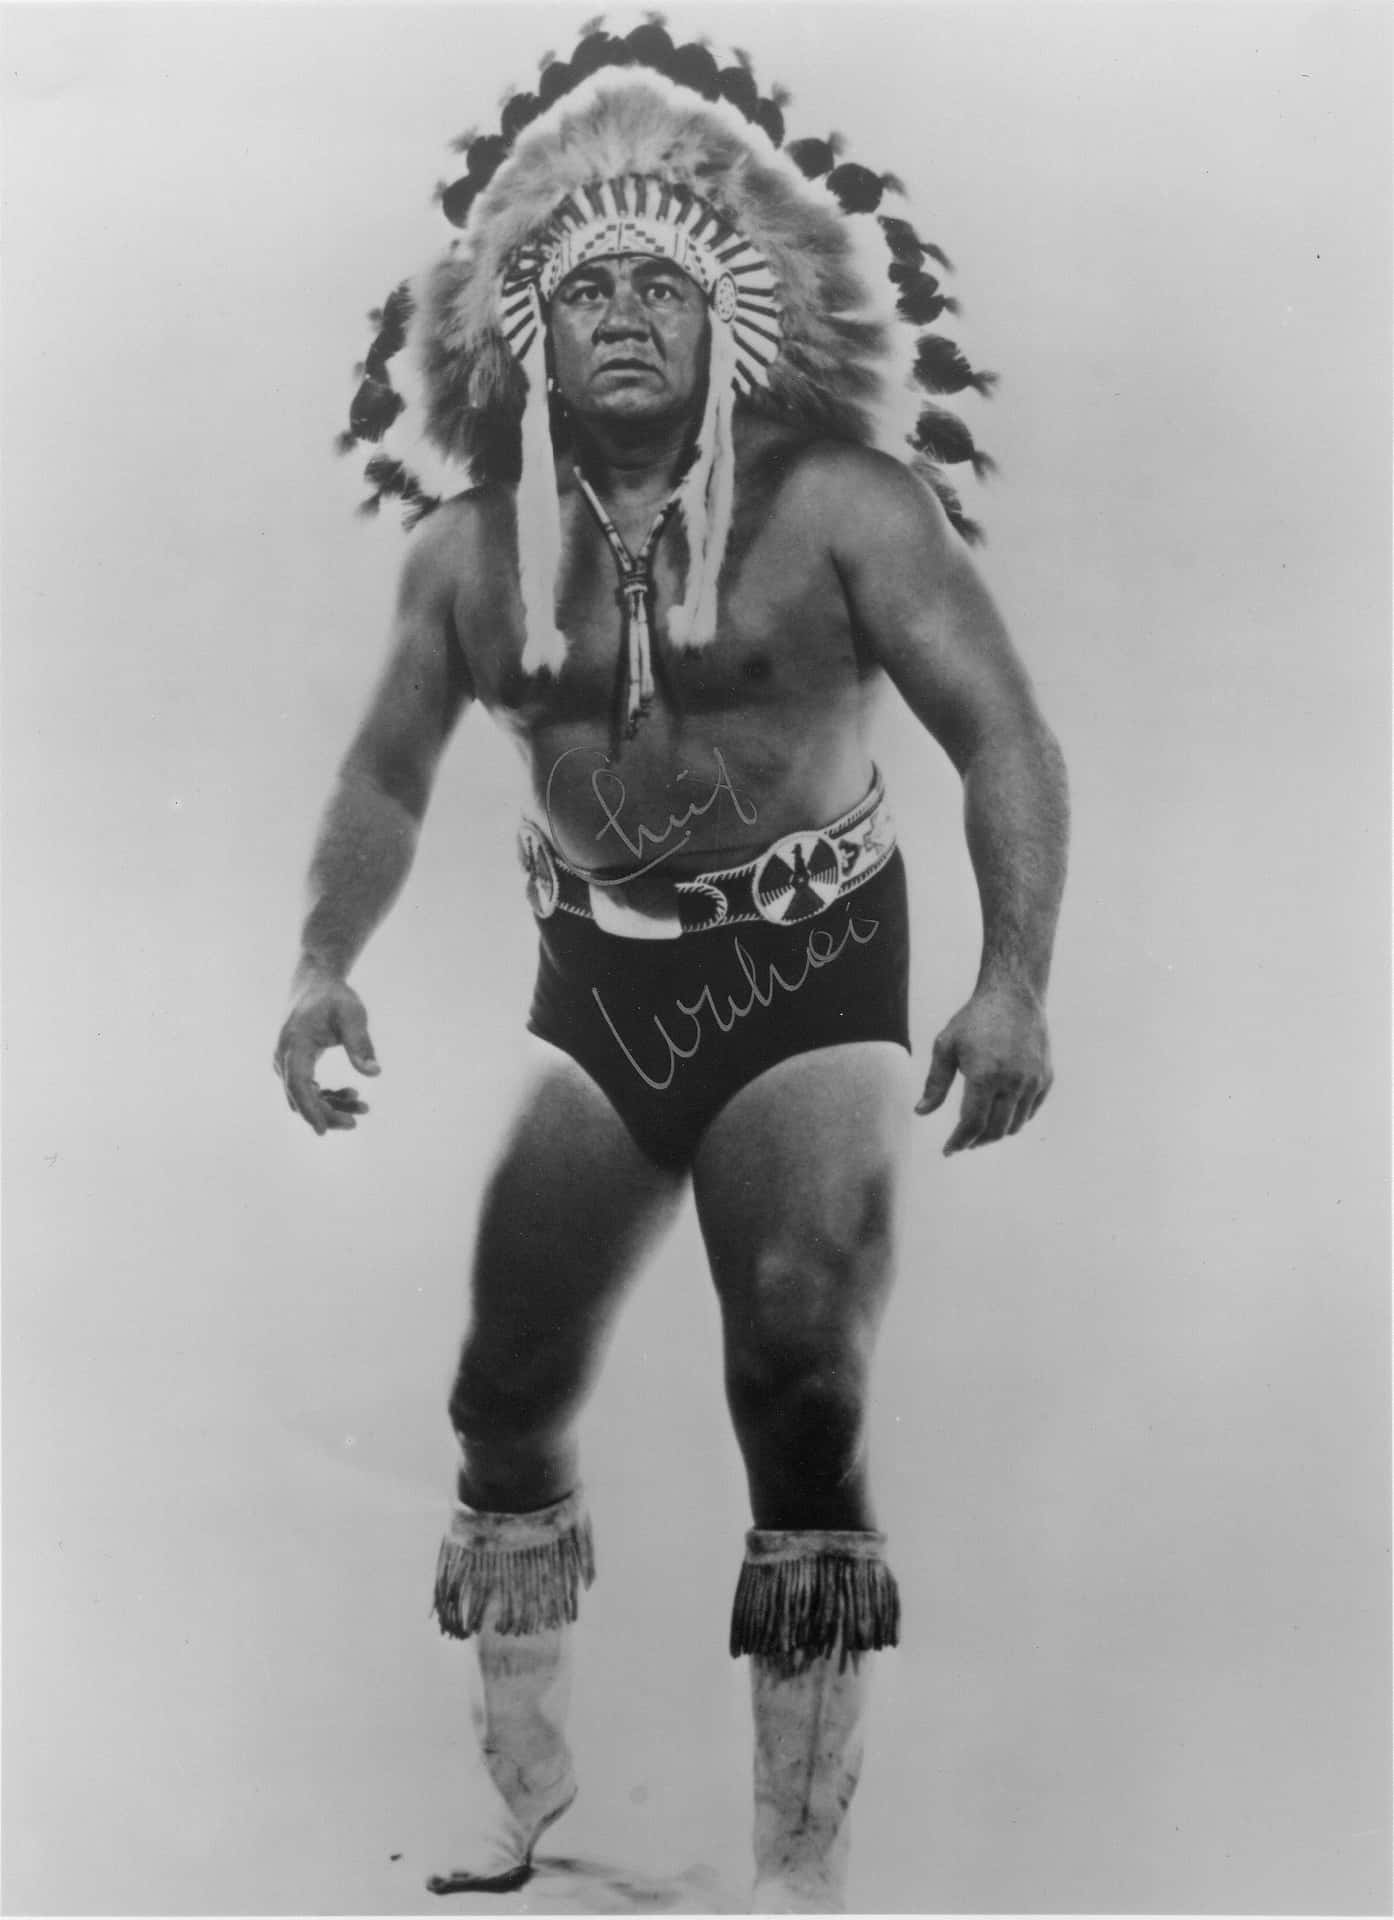 Caption: Iconic Shot of Native American Wrestler, Wahoo McDaniel Wallpaper